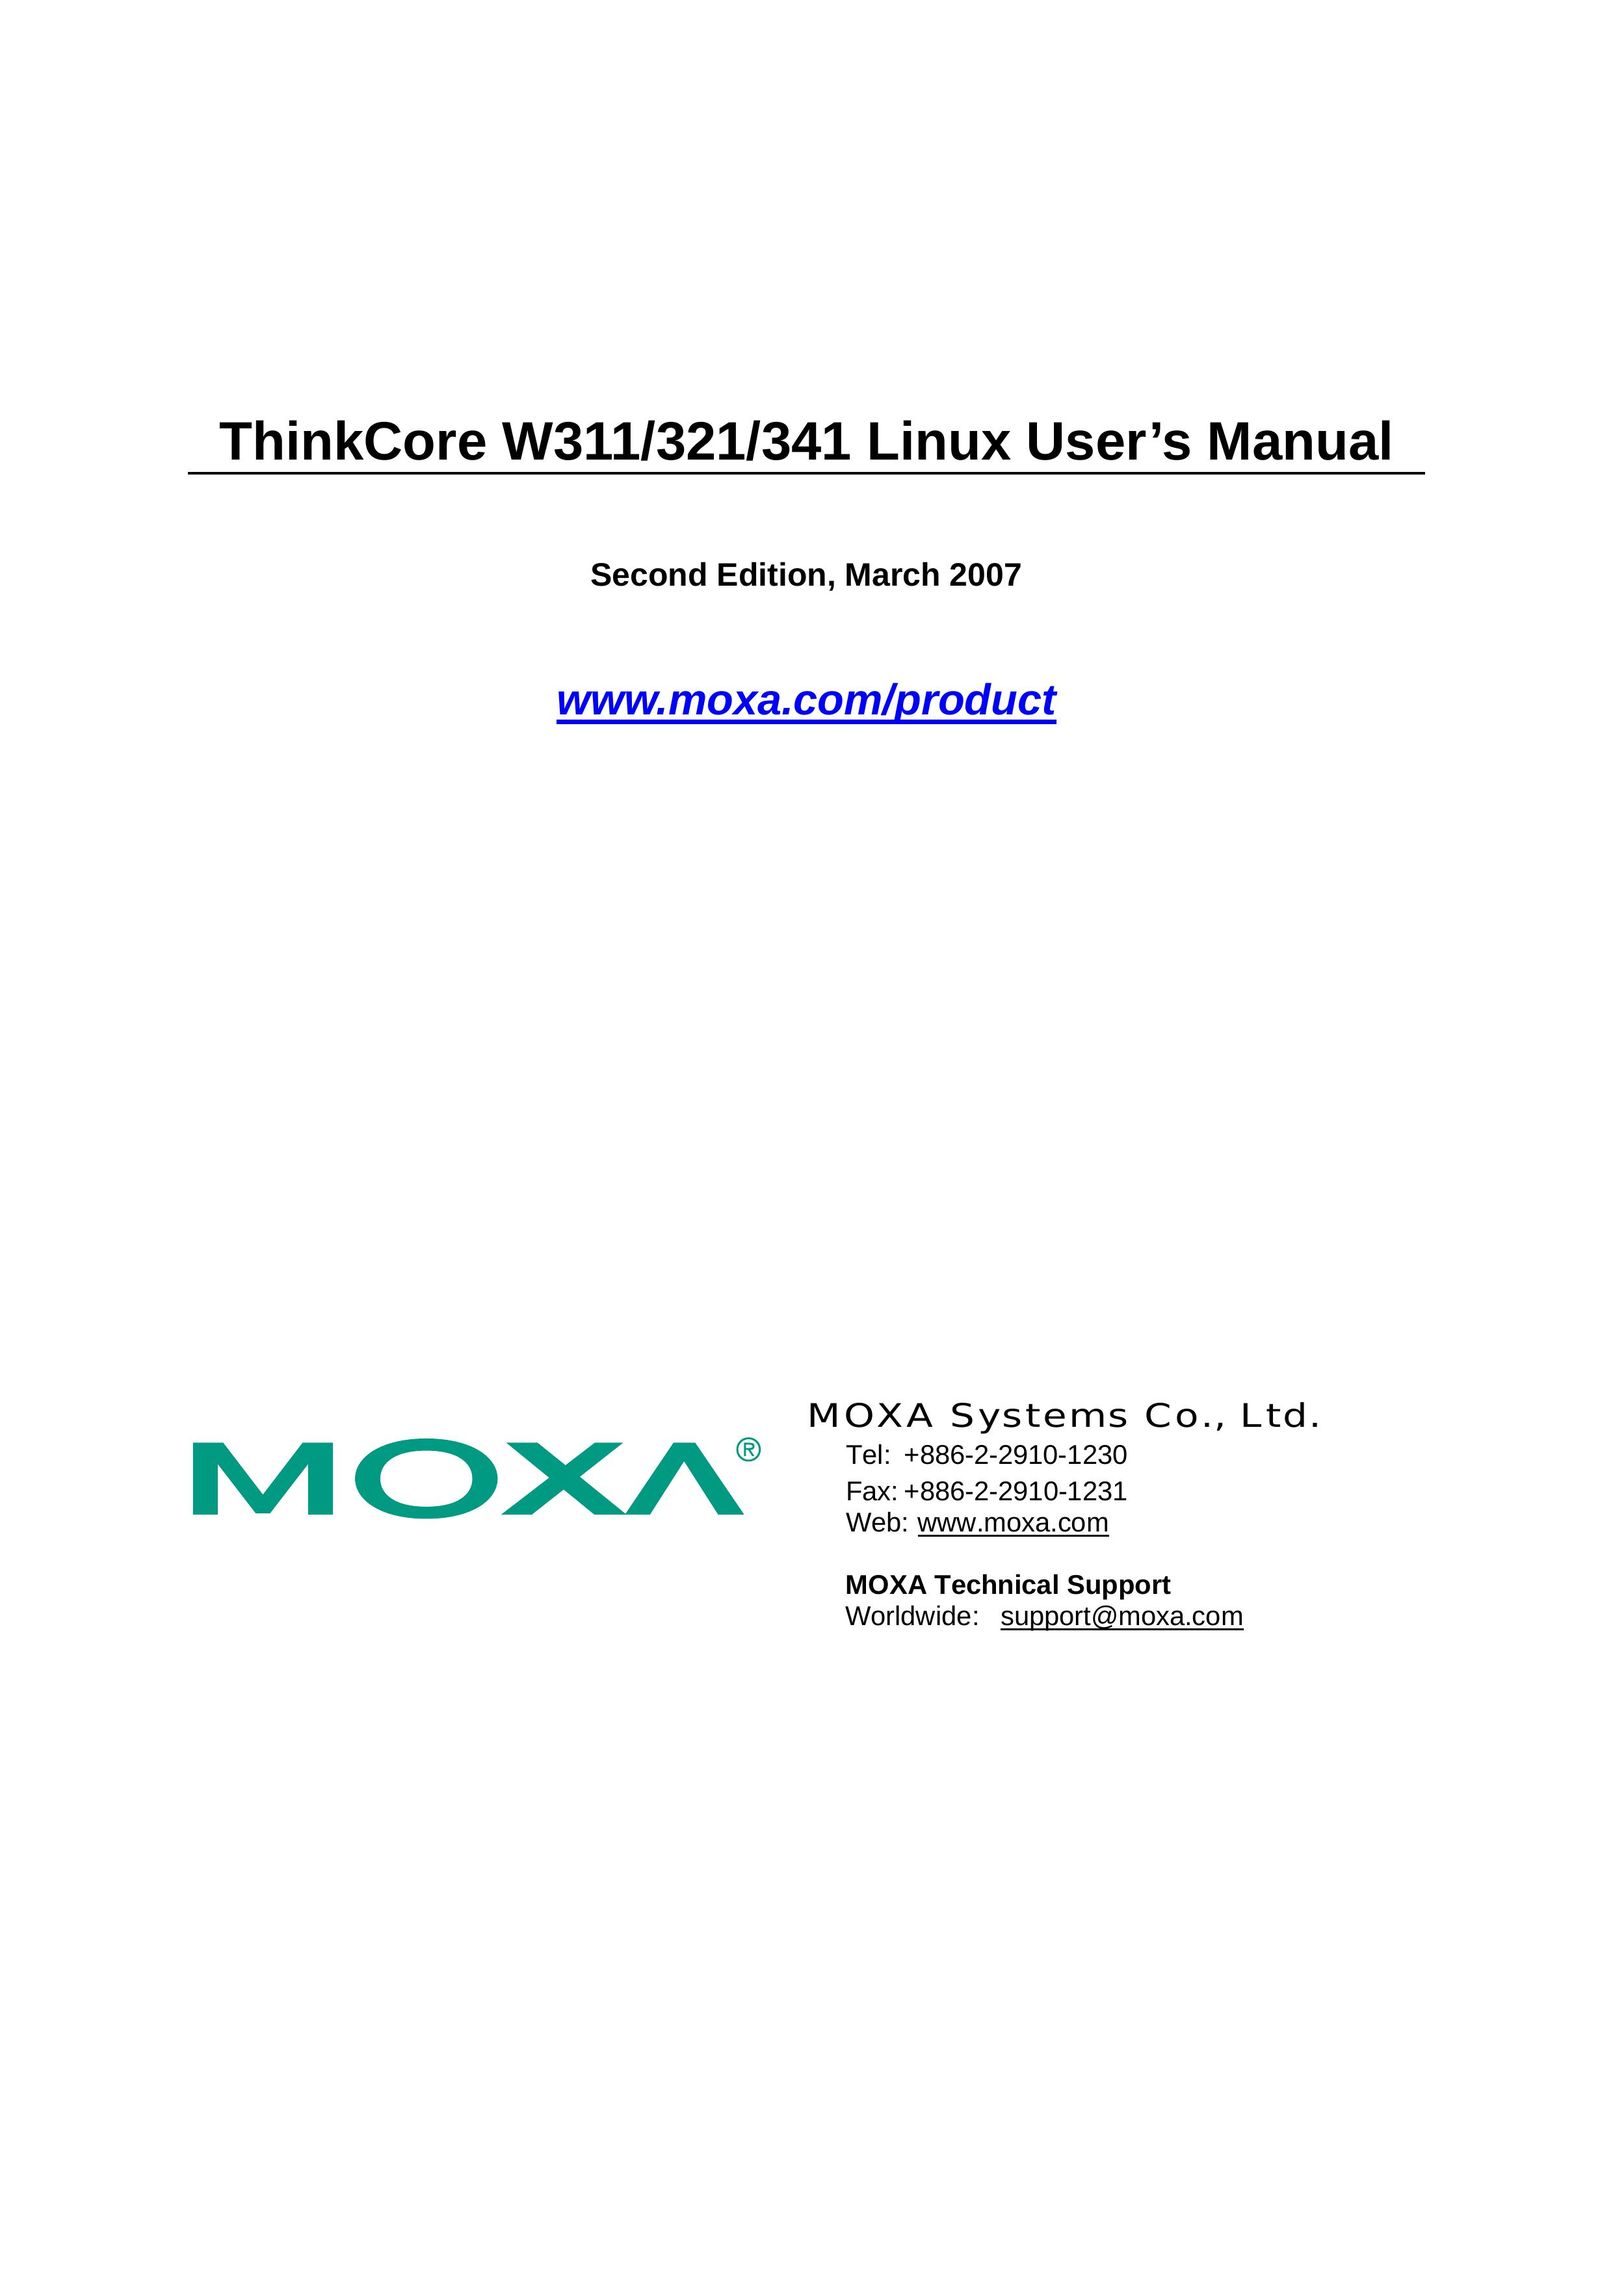 Moxa Technologies W341 Computer Hardware User Manual